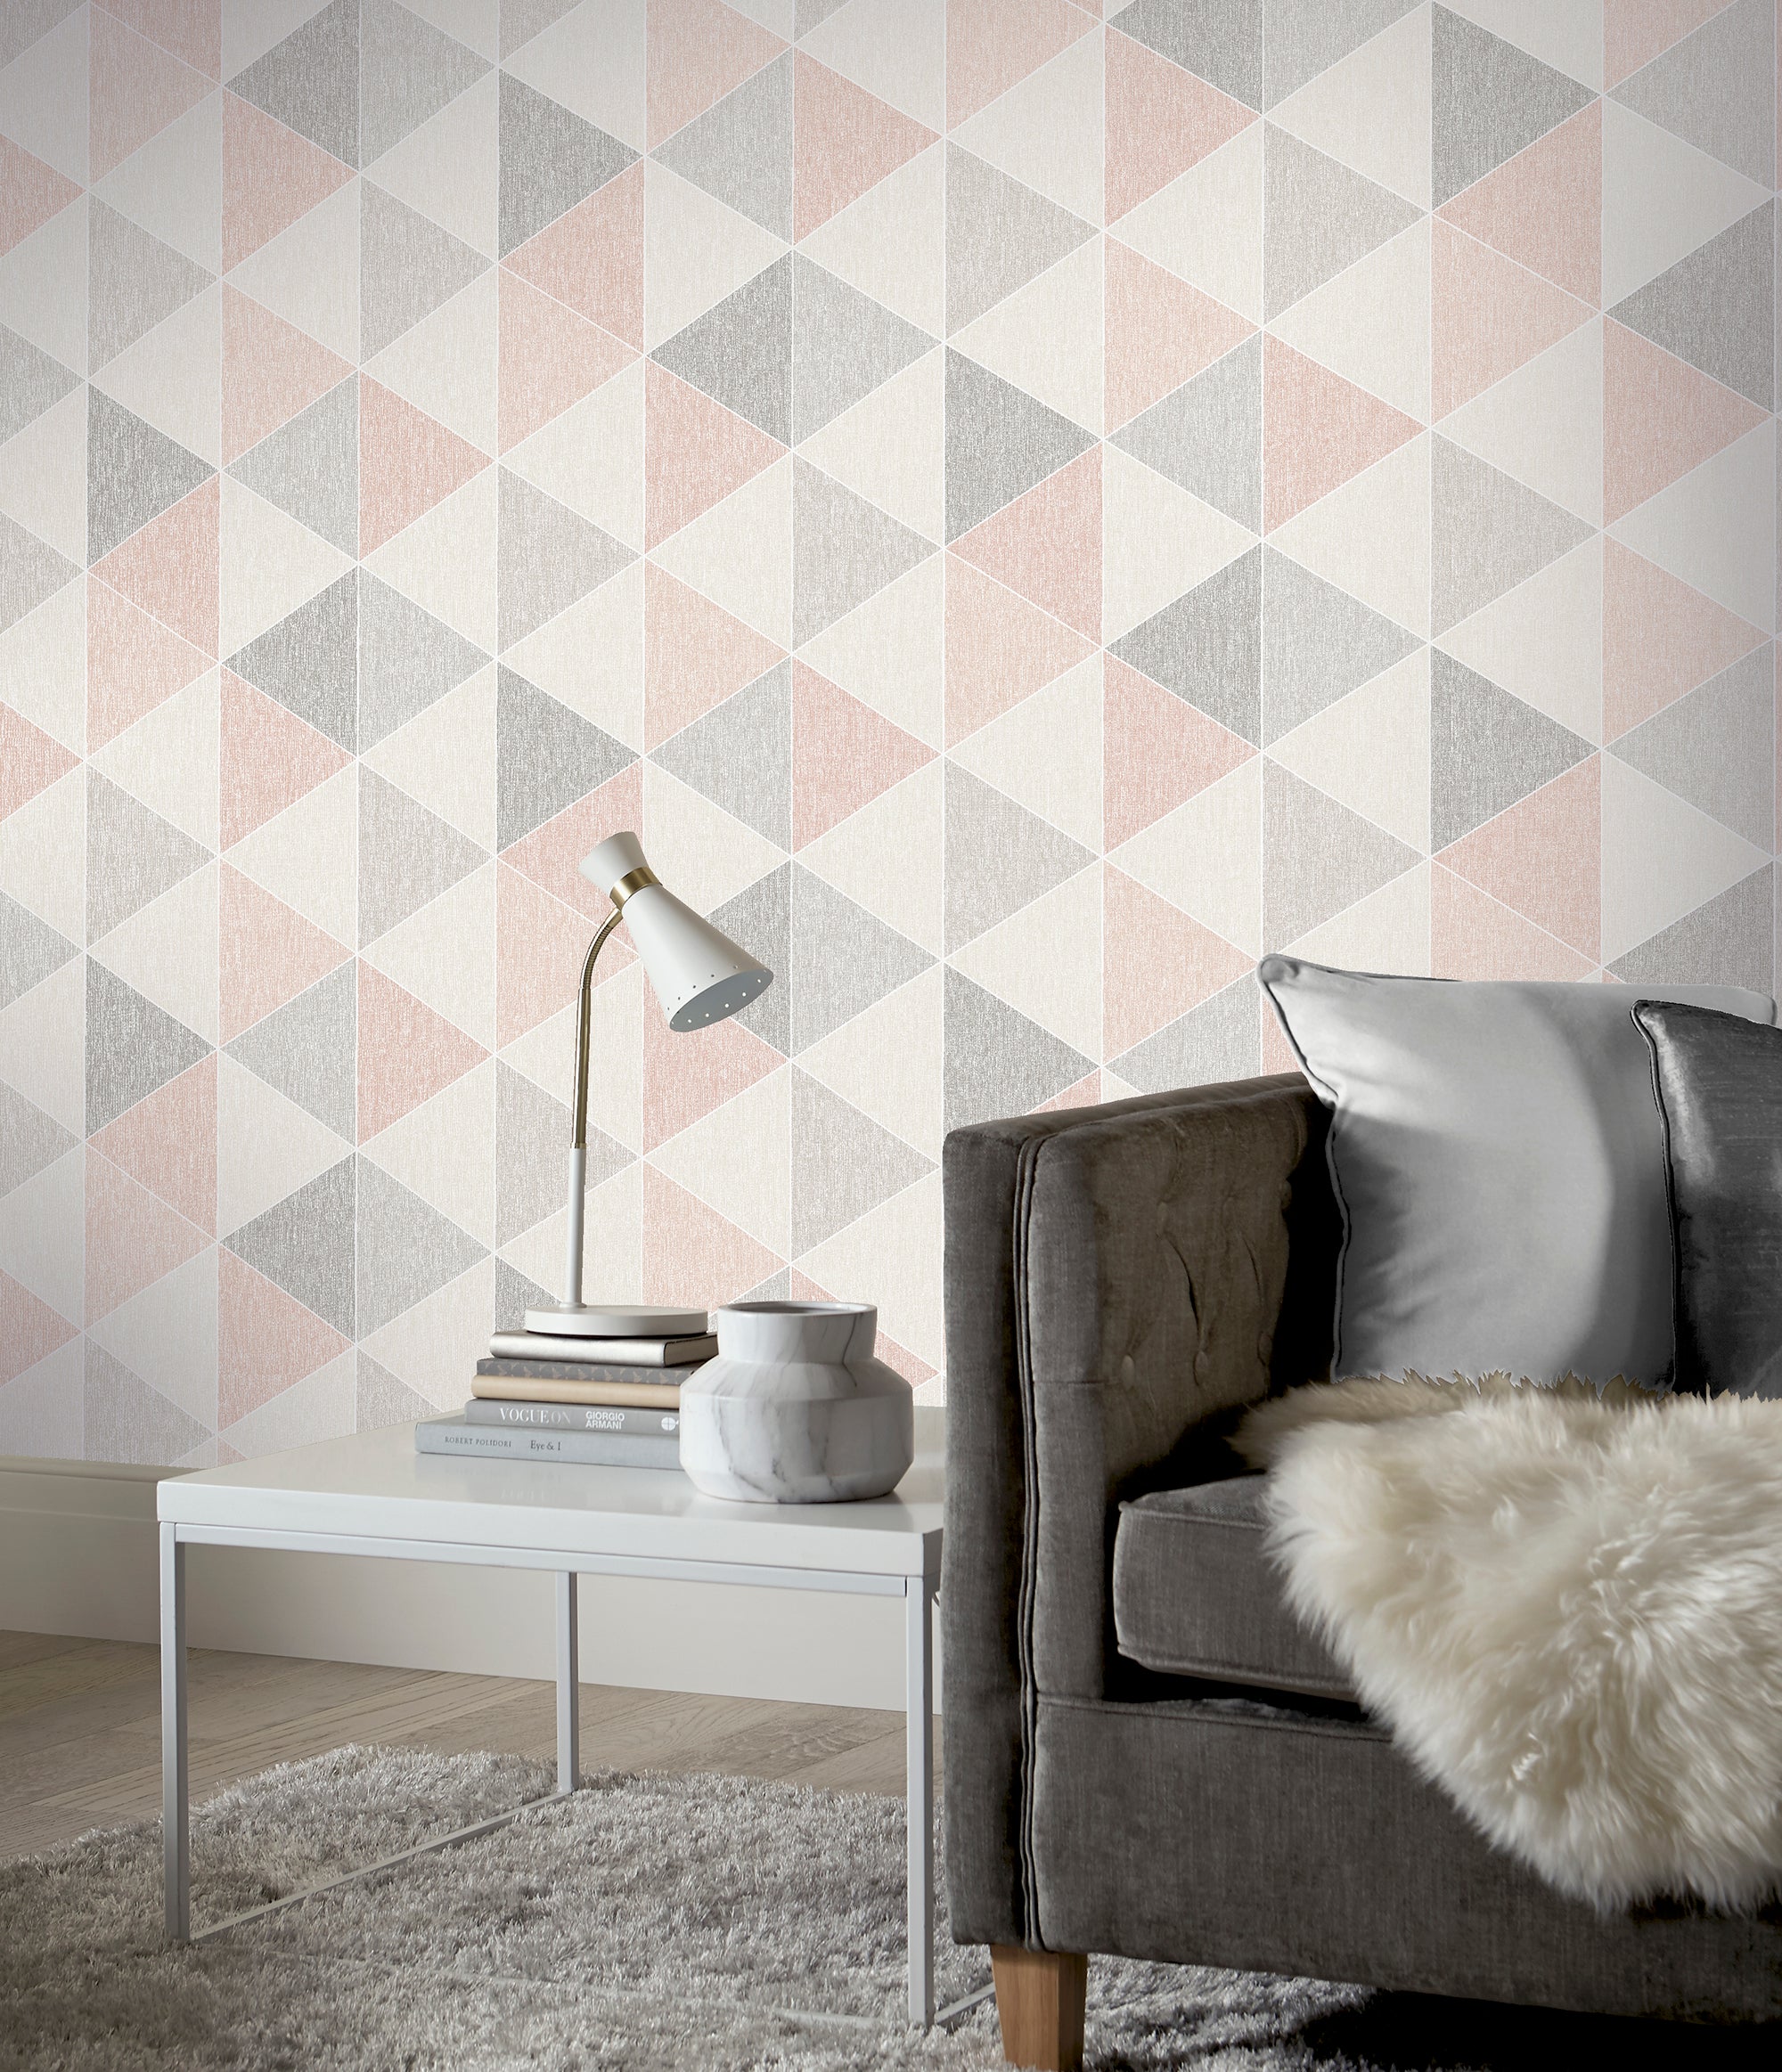 Scandi Triangle Pink Wallpaper